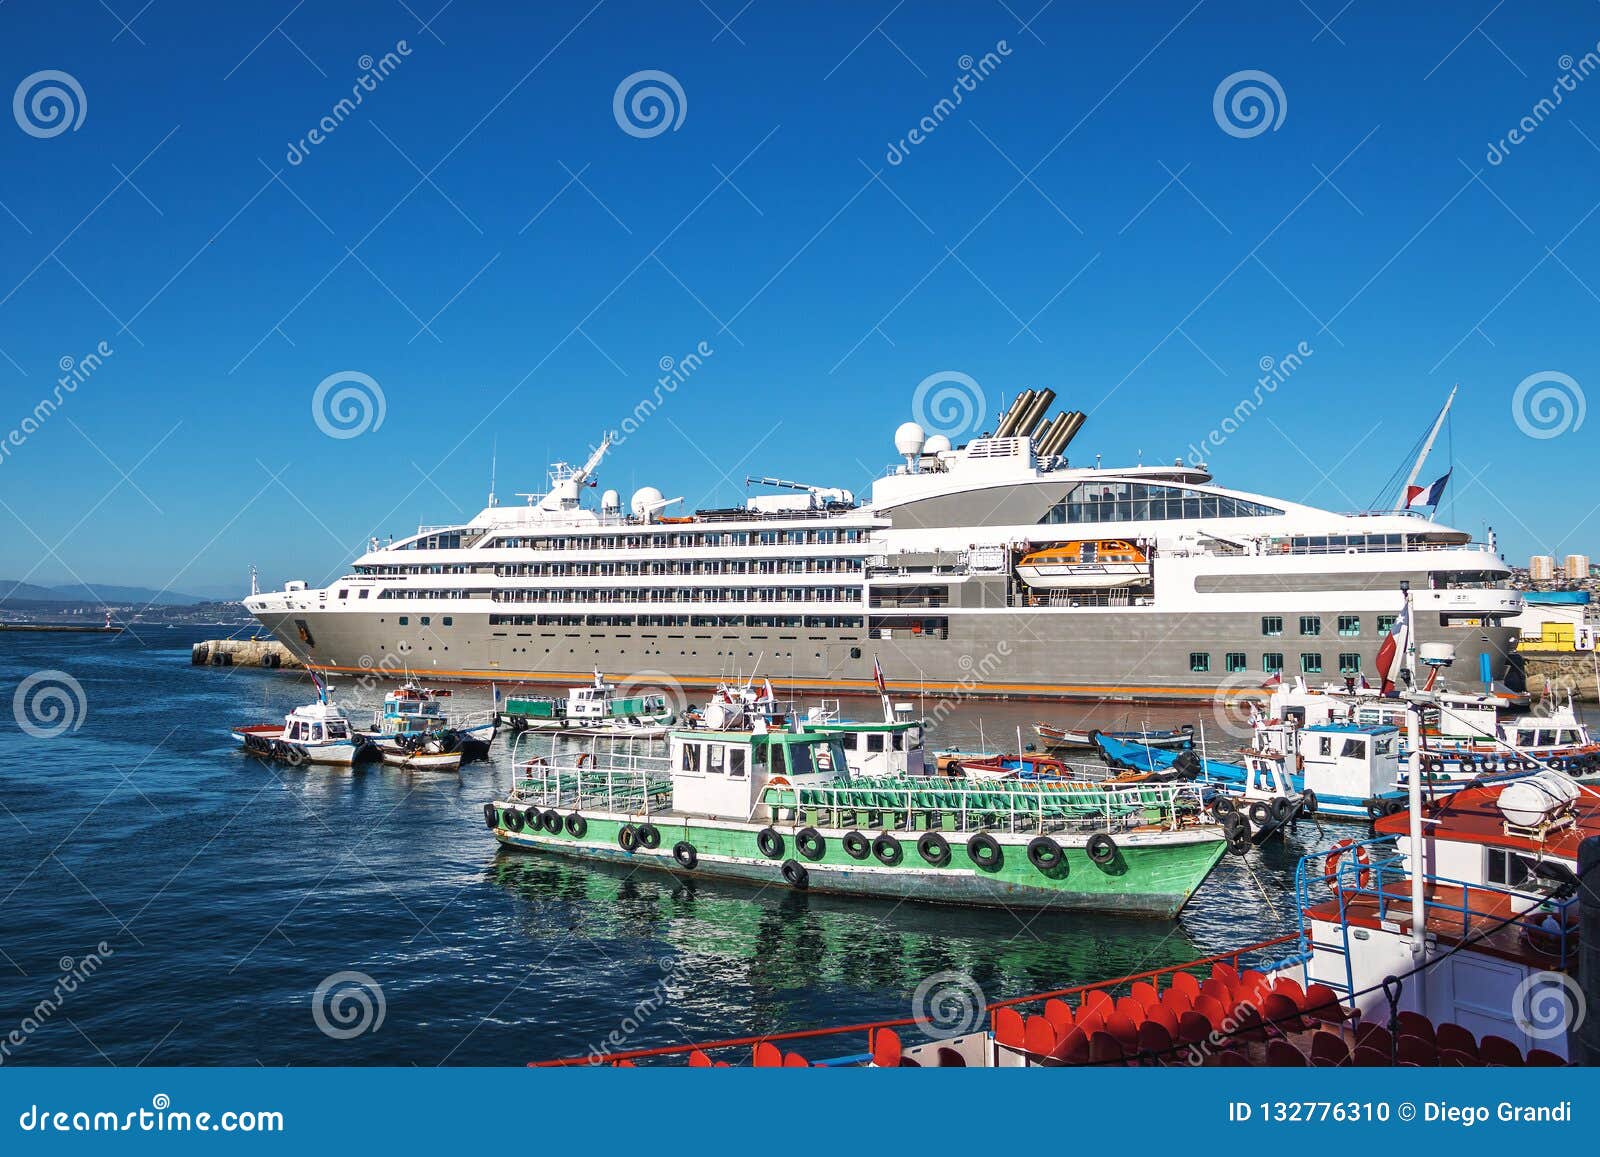 cruise ship at muelle prat pier - valparaiso, chile